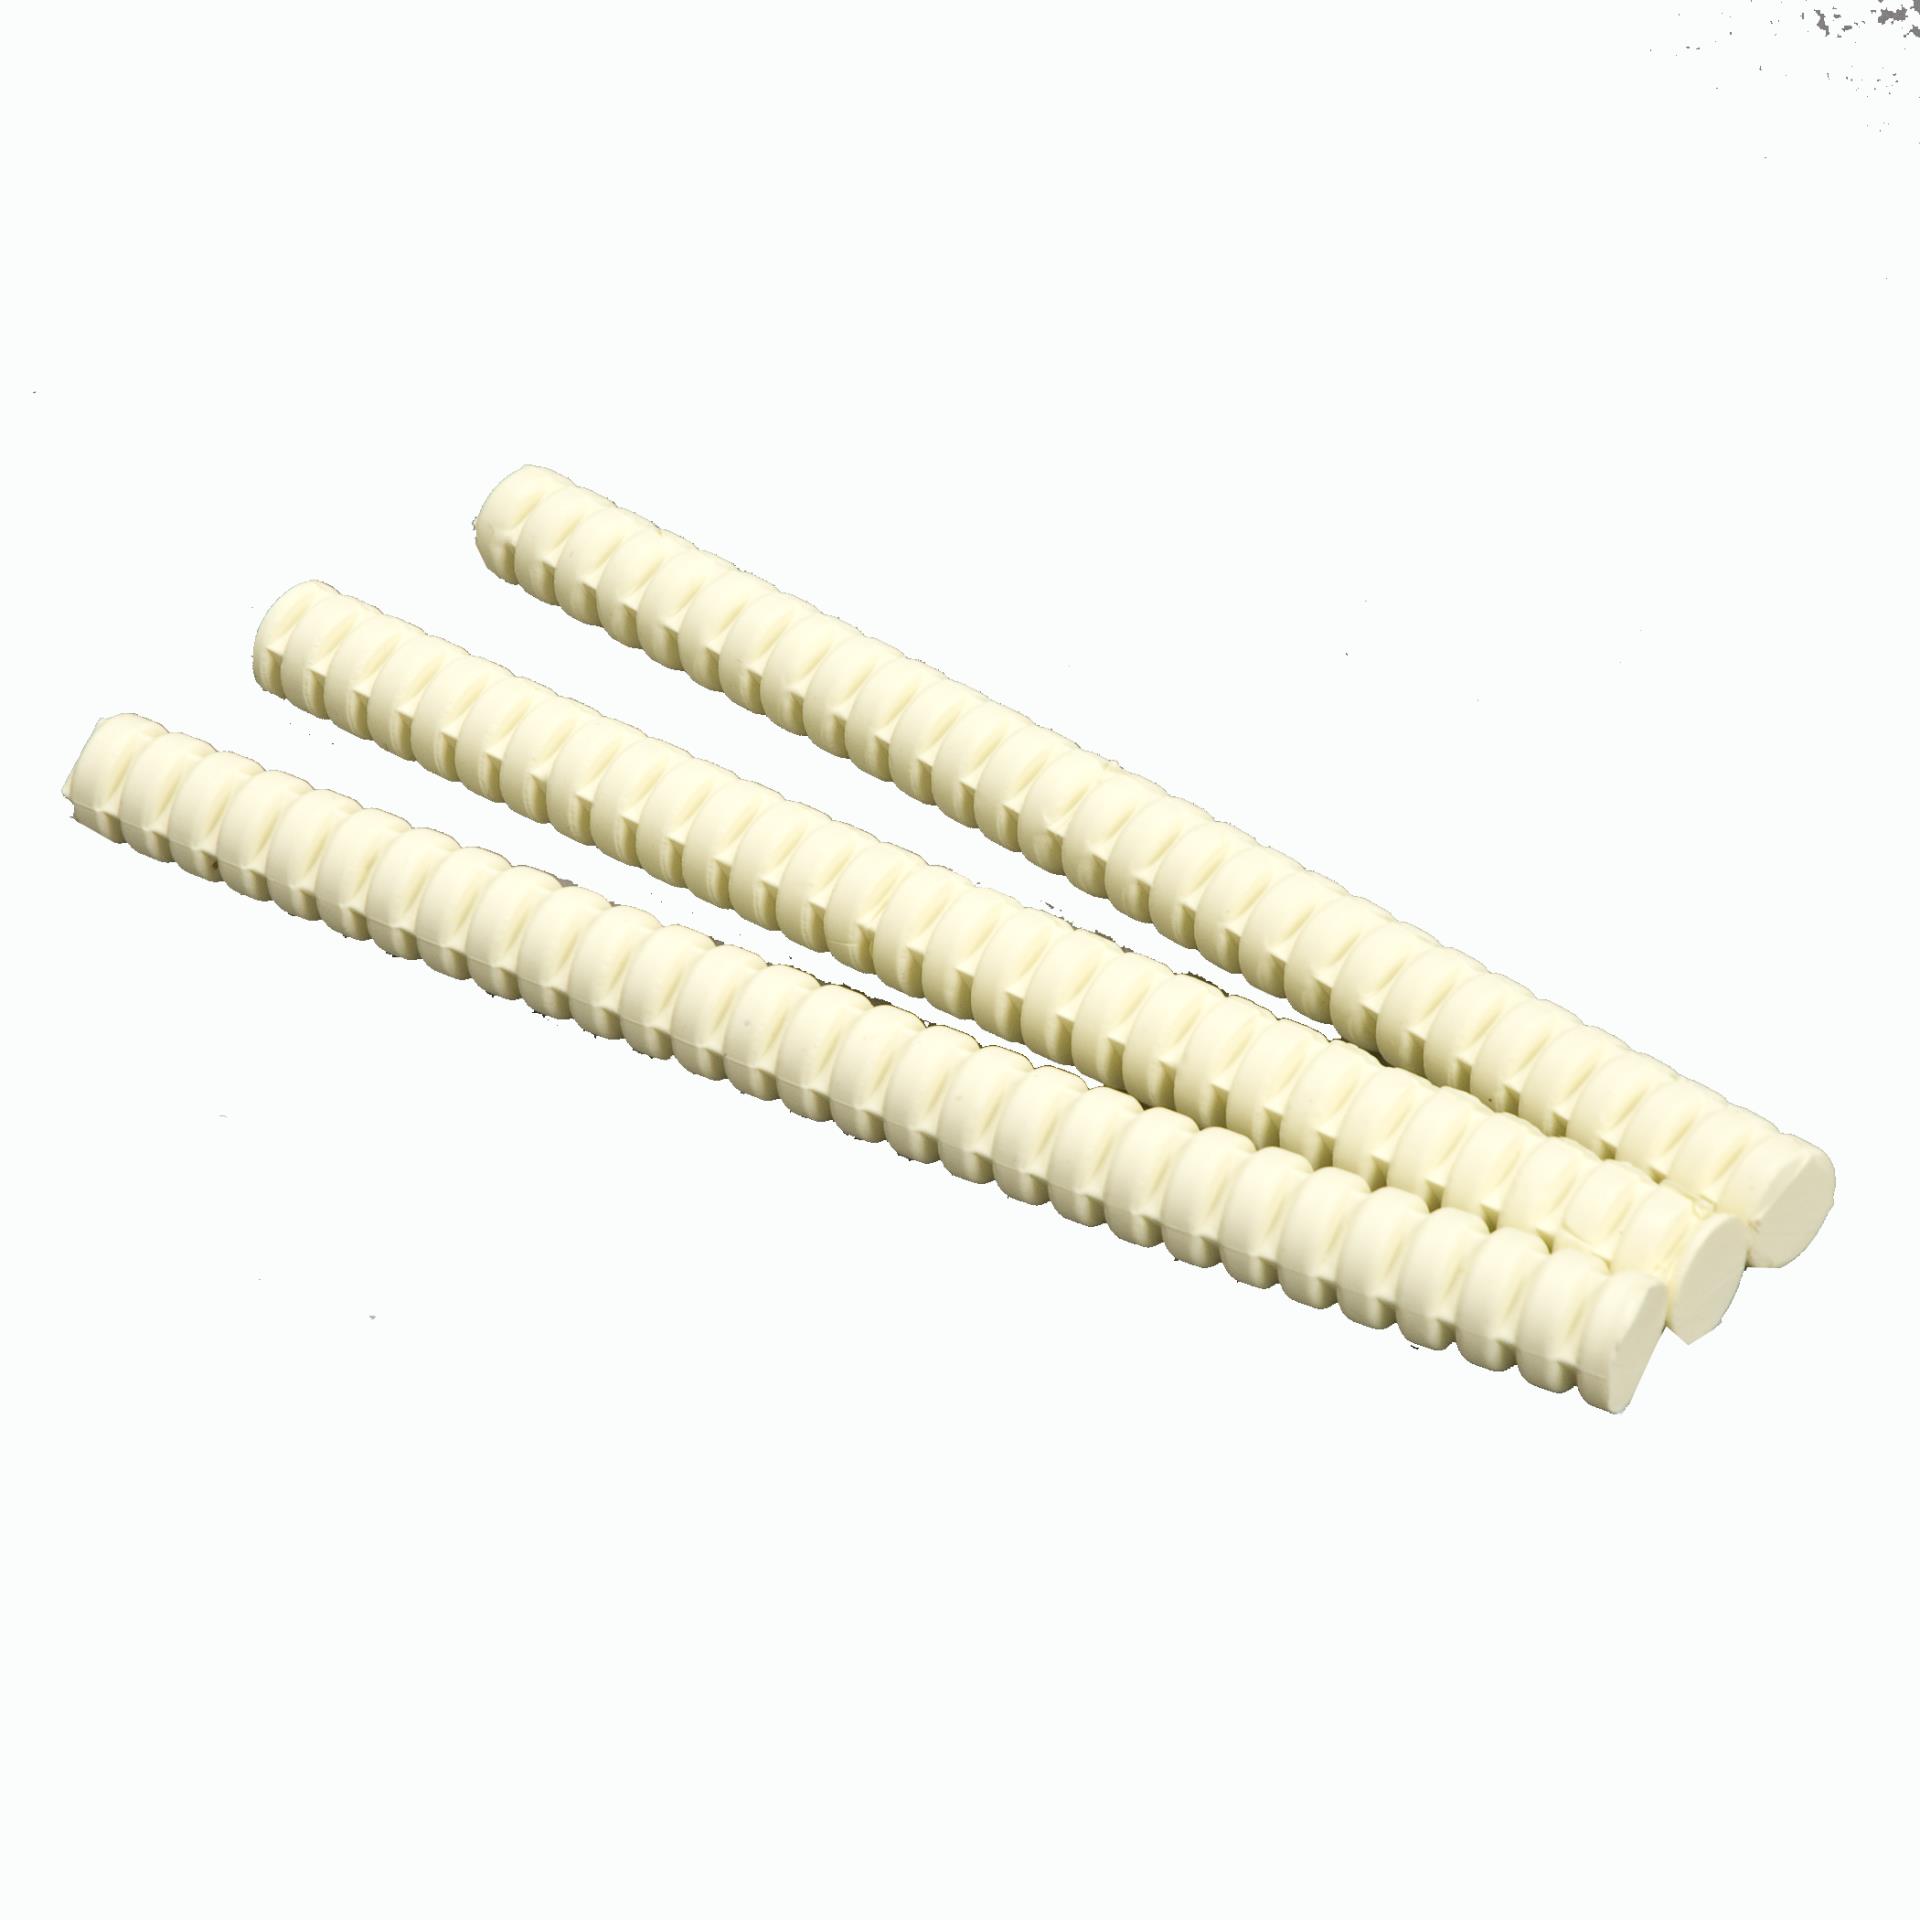 288 Wholesale Bulk Glue Sticks All Purpose, Washable - at 